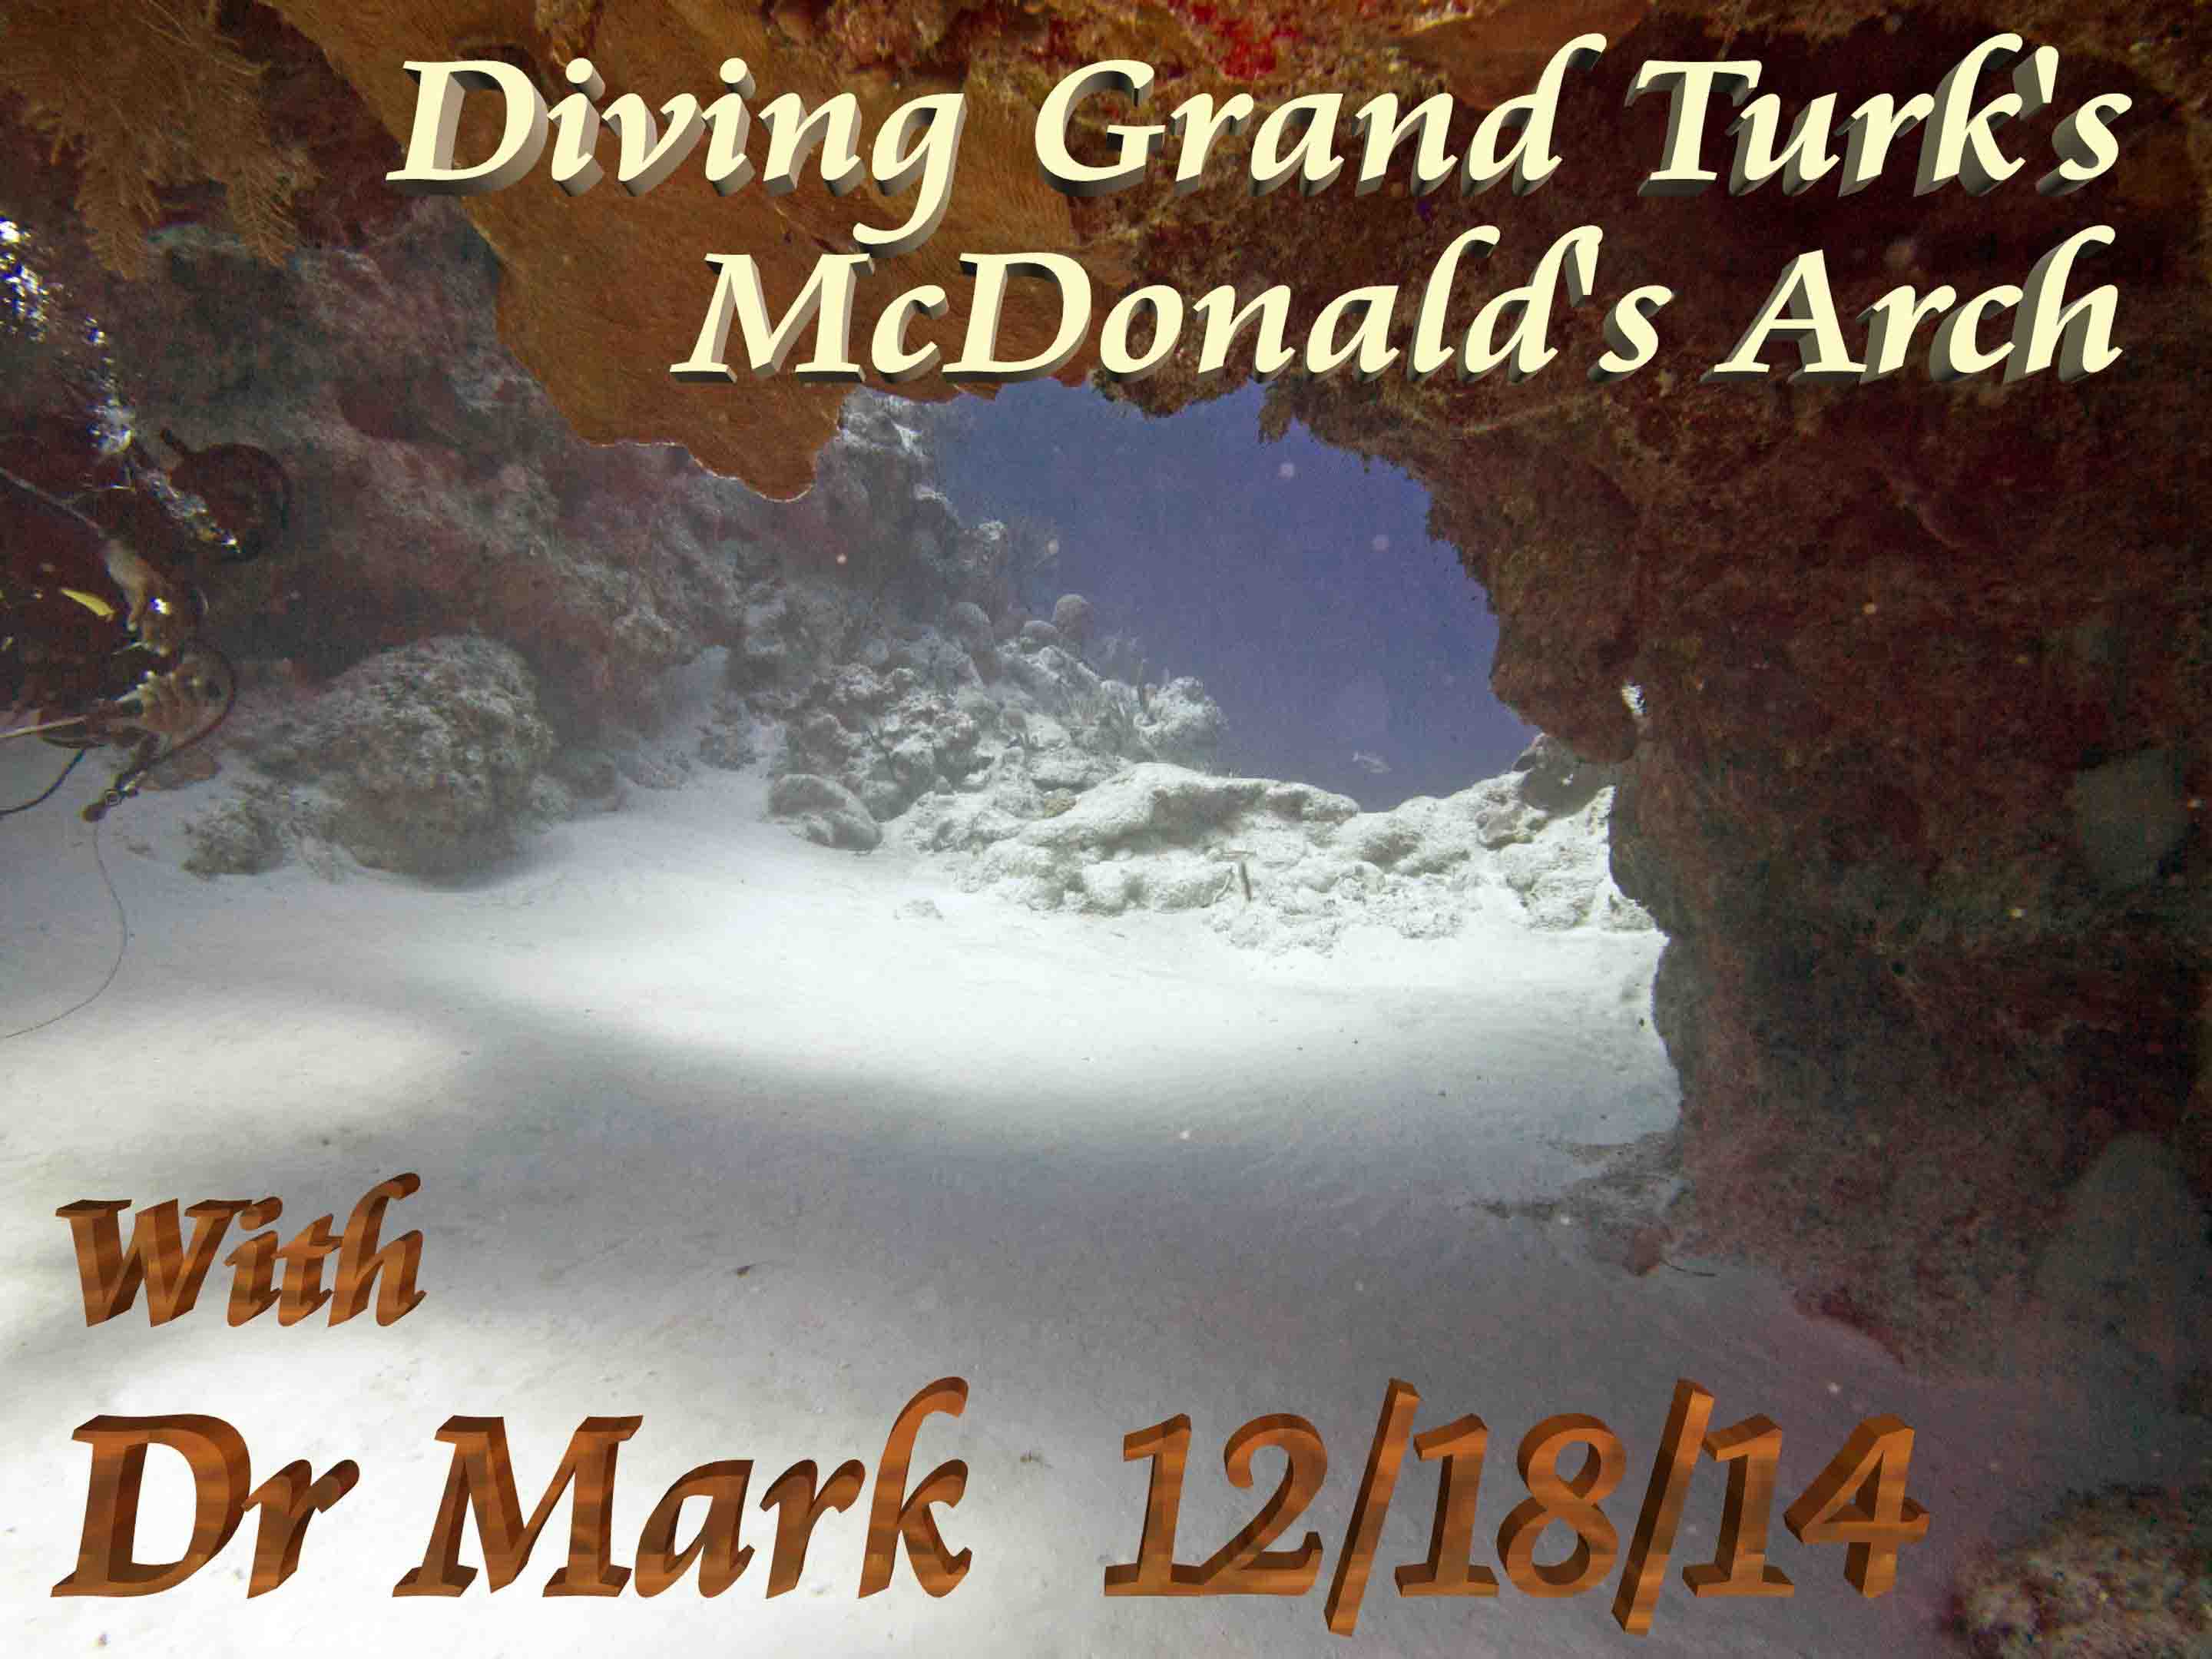 Grank Turk McDonalds Arch
                12-18-14